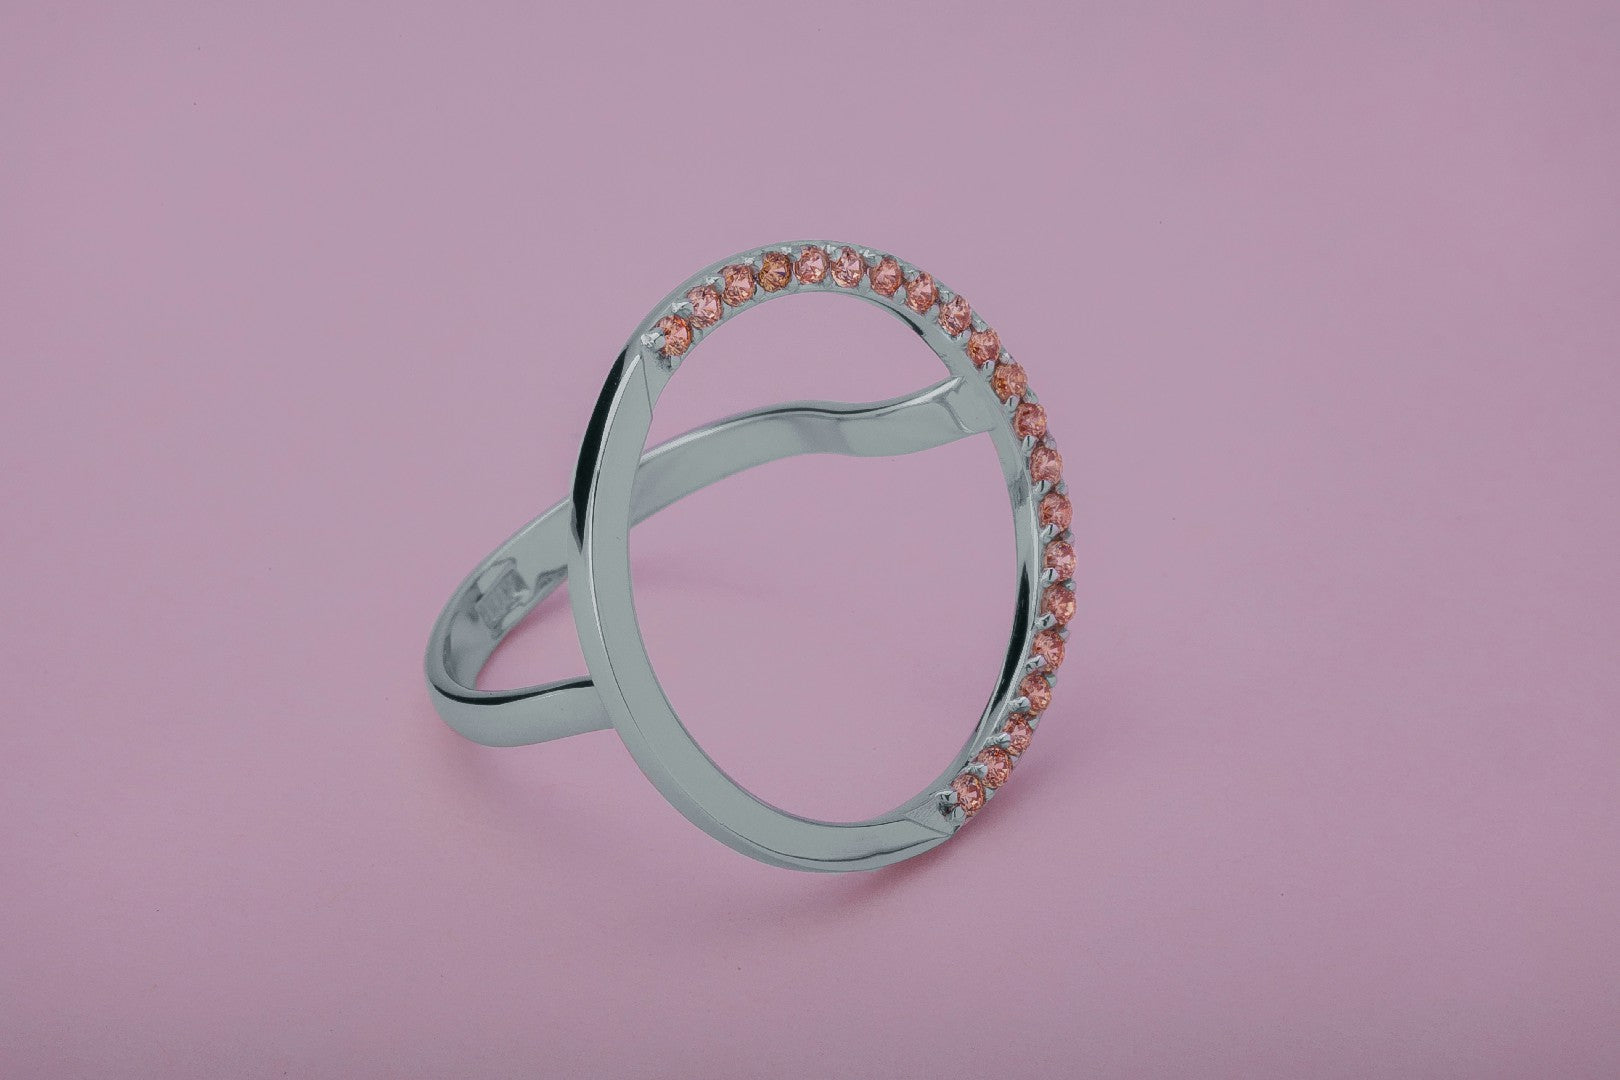 Simple Round Ring with Orange Gems, Rhodium Plated 925 Silver - vikingworkshop